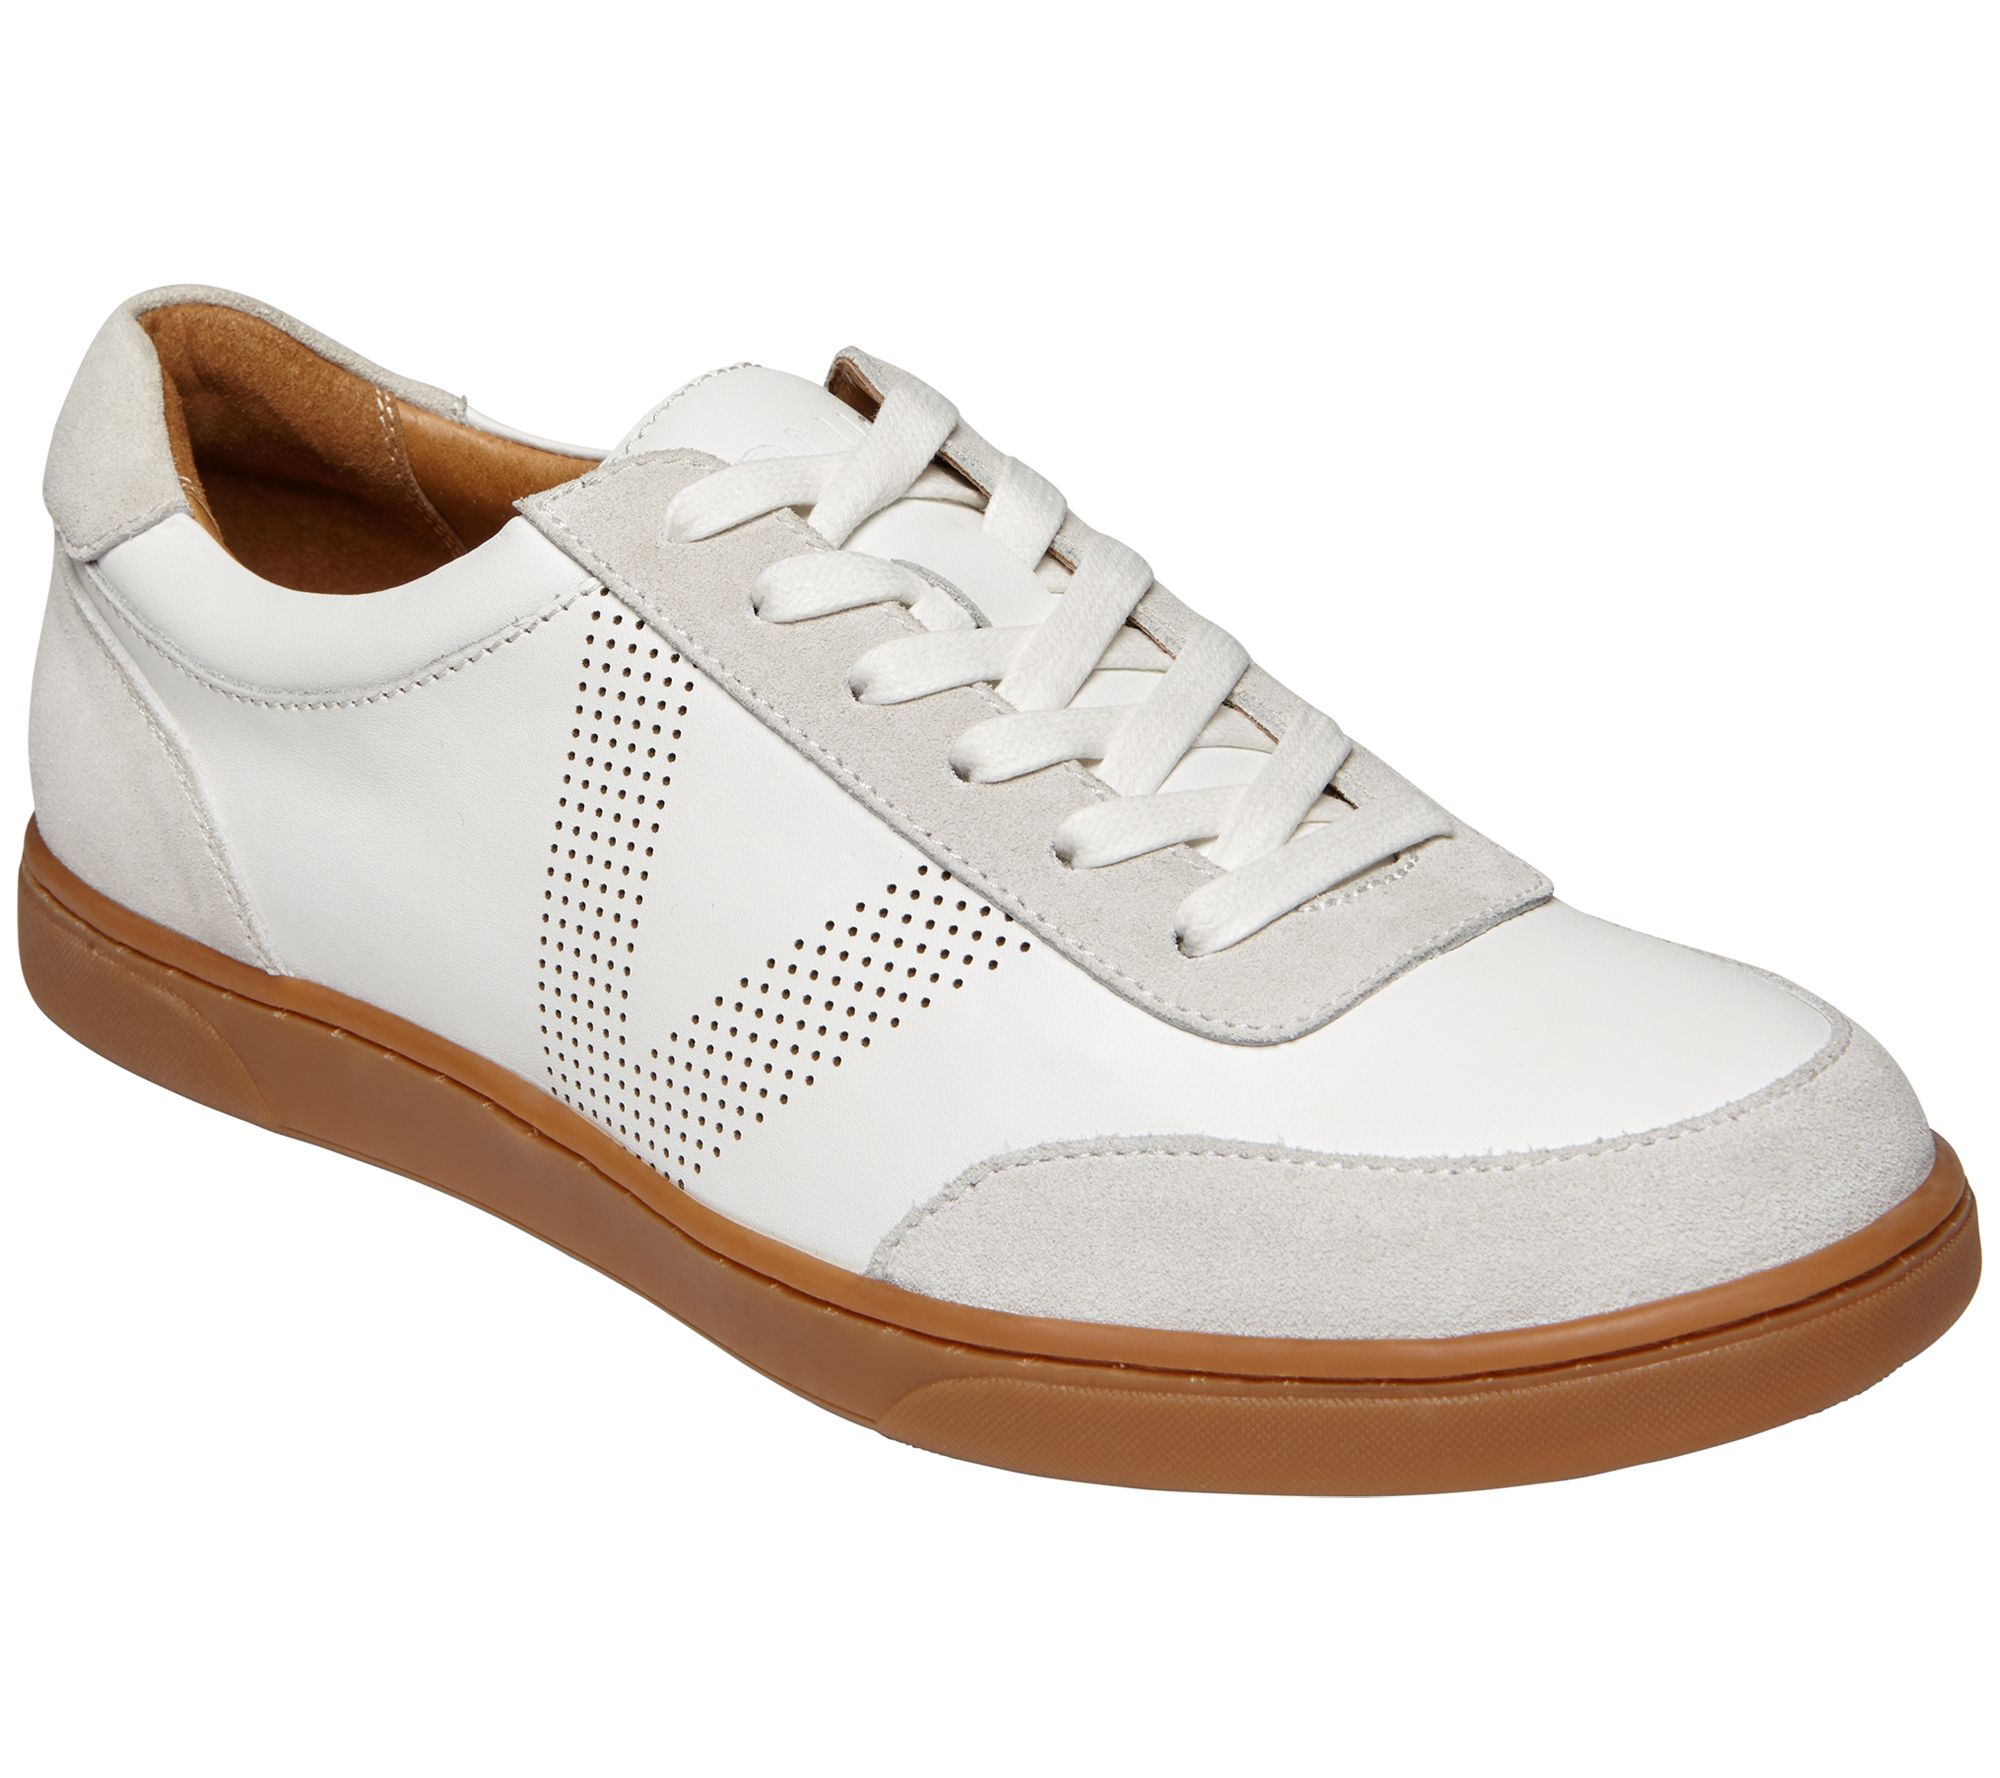 Fashion & Athletic Trainers Men's Shoes Nordic Walking Shoes Vionic ...